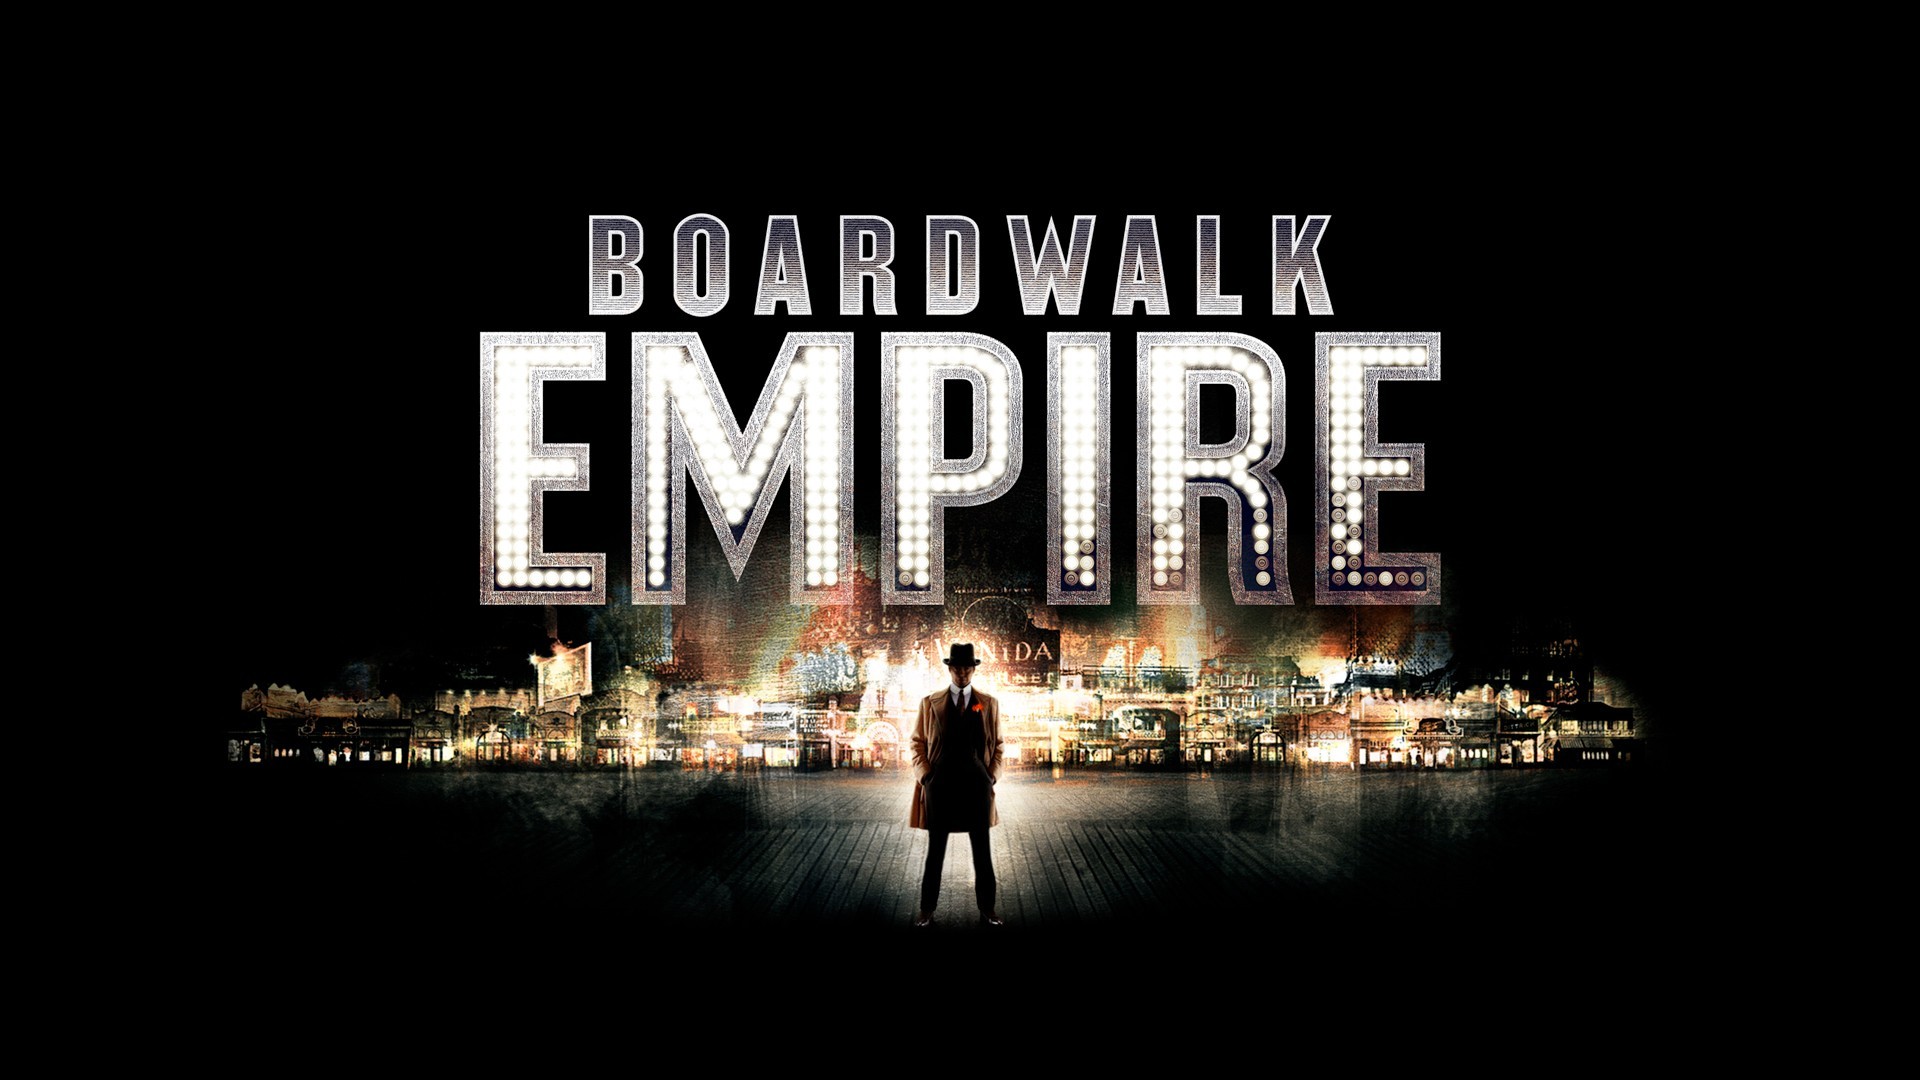 Boardwalk Empire, Nucky Thompson, Enoch Thompson, Atlantic City Wallpaper